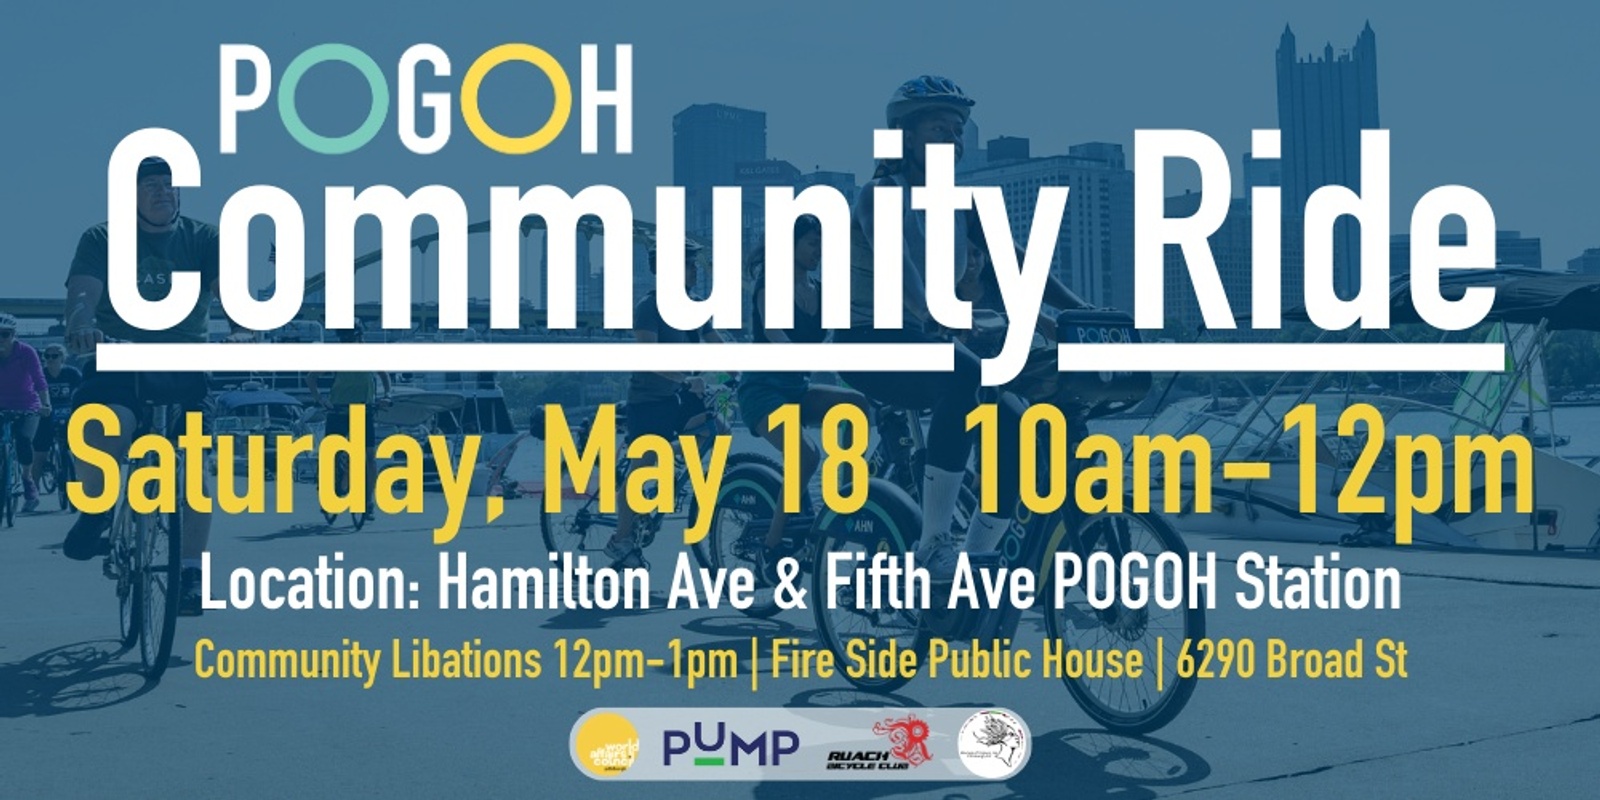 Banner image for May 18th - POGOH Community Ambassador Ride 